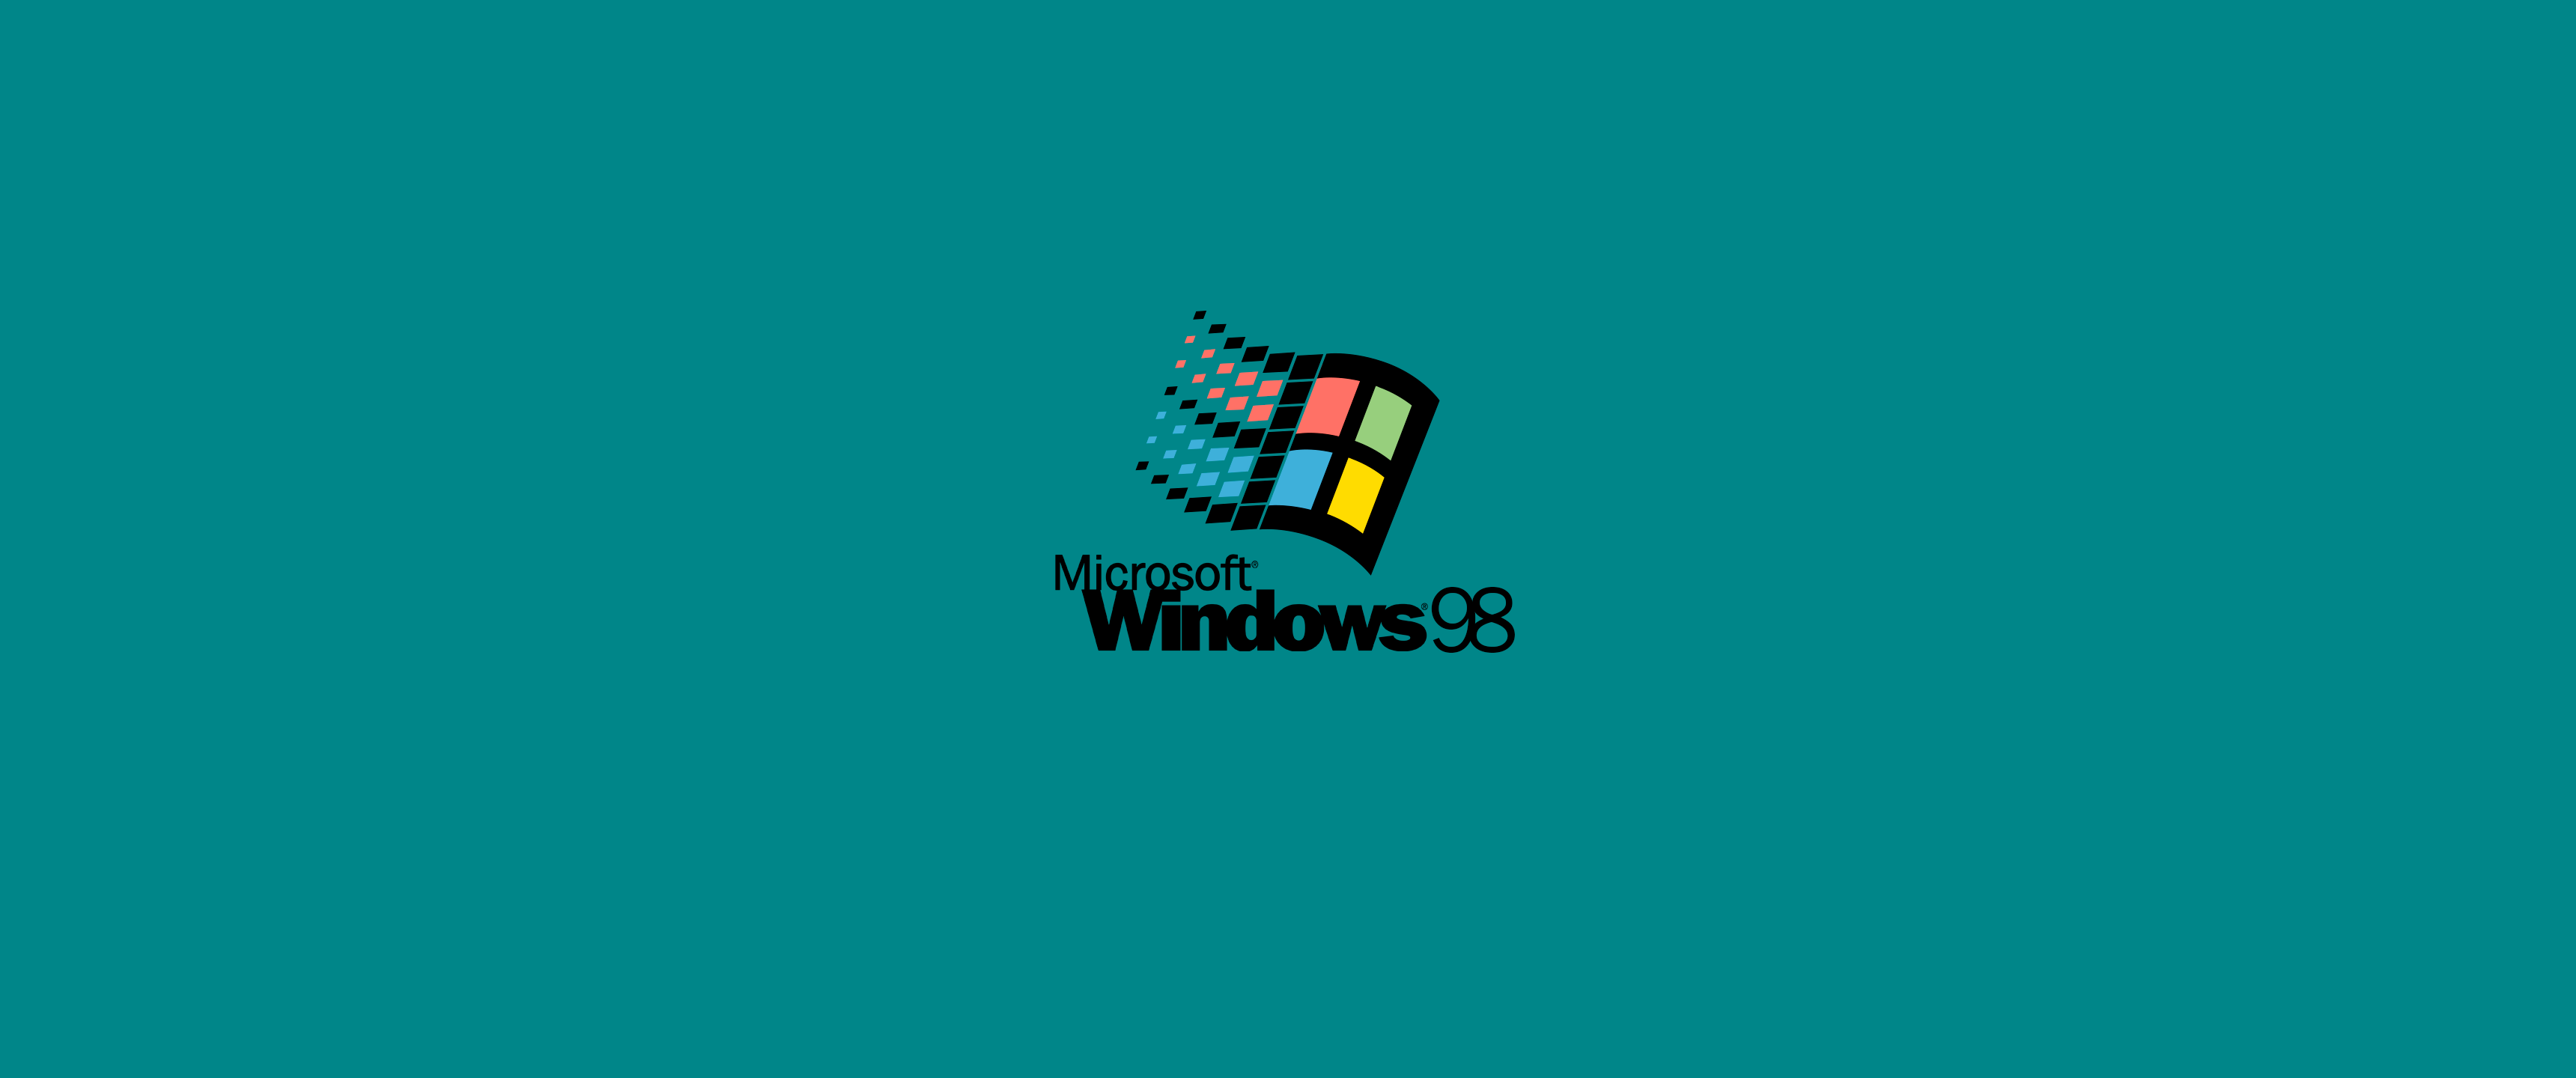 Technology Windows 98 HD Wallpaper | Background Image